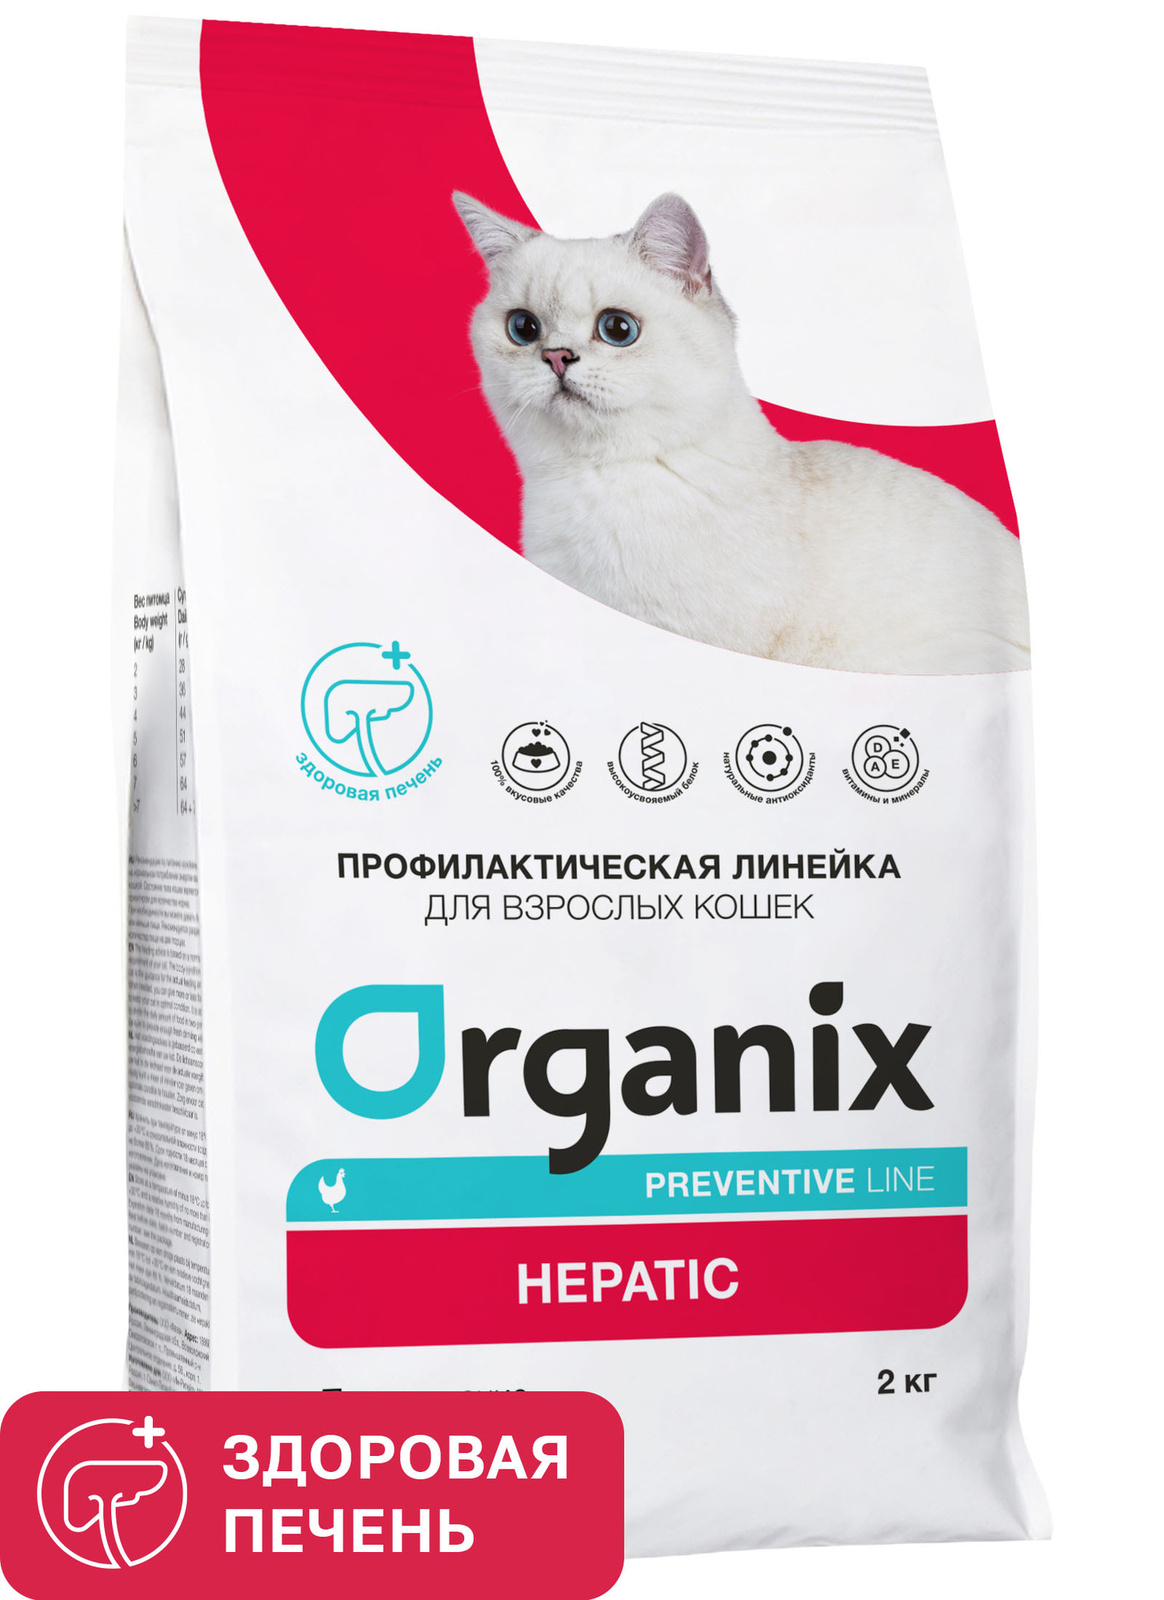 Organix Preventive Line hepatic сухой корм для кошек 